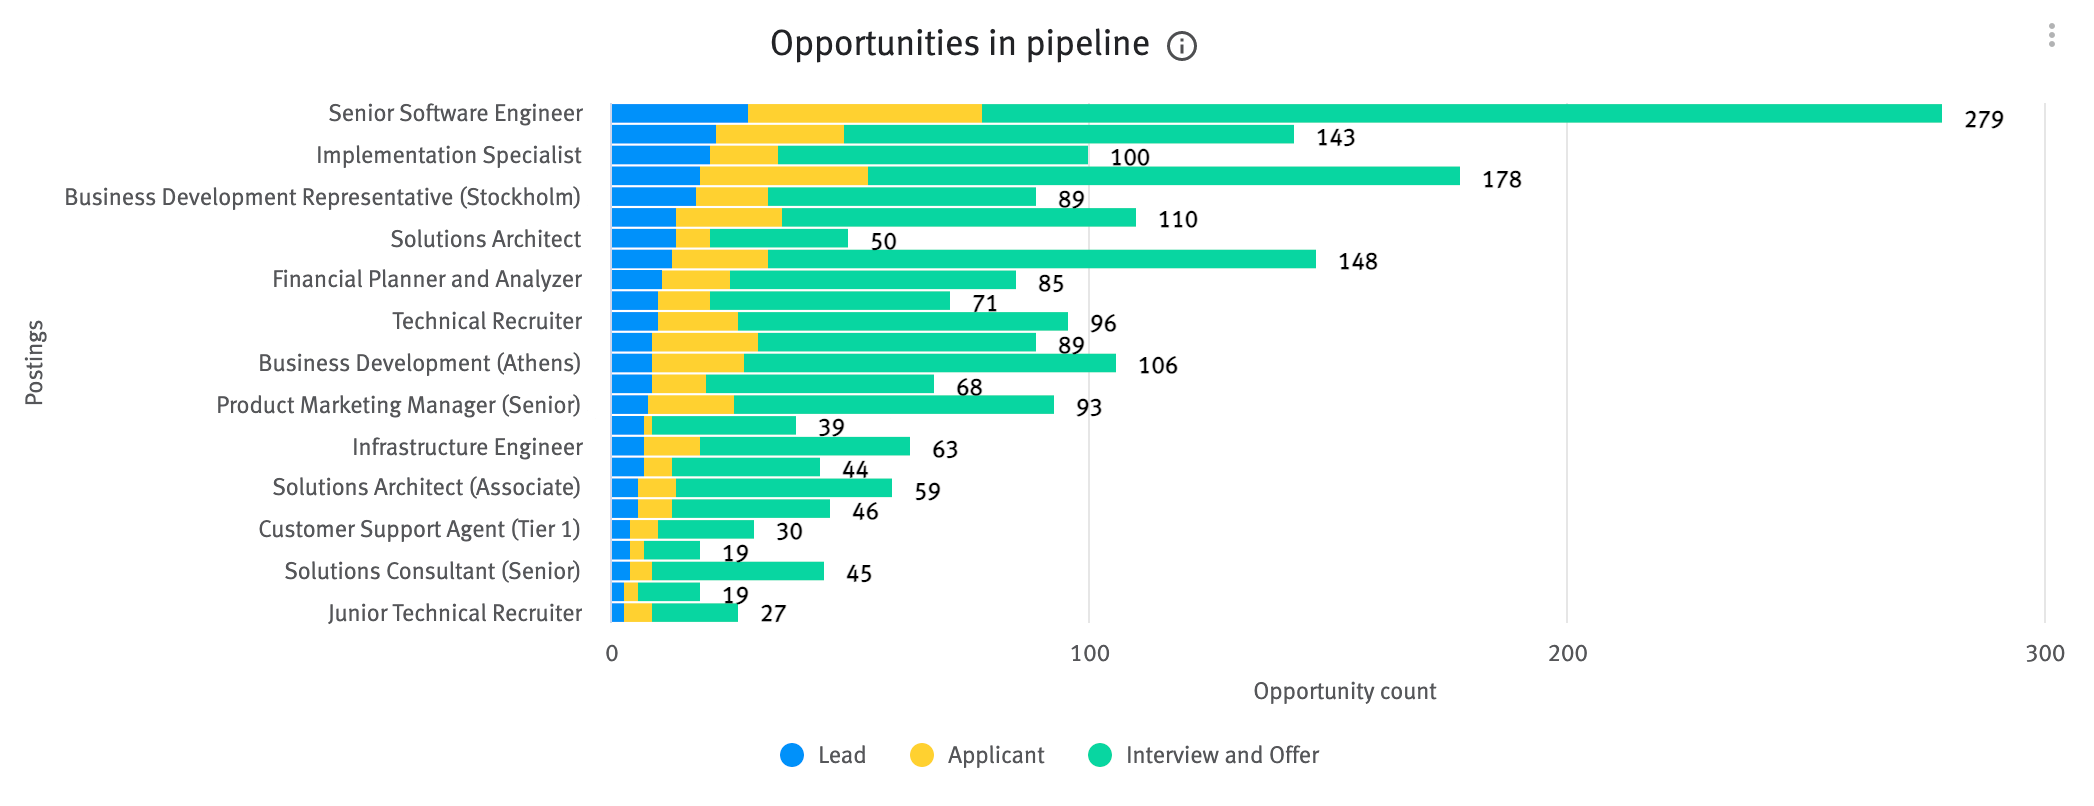 Opportunities in pipeline chart